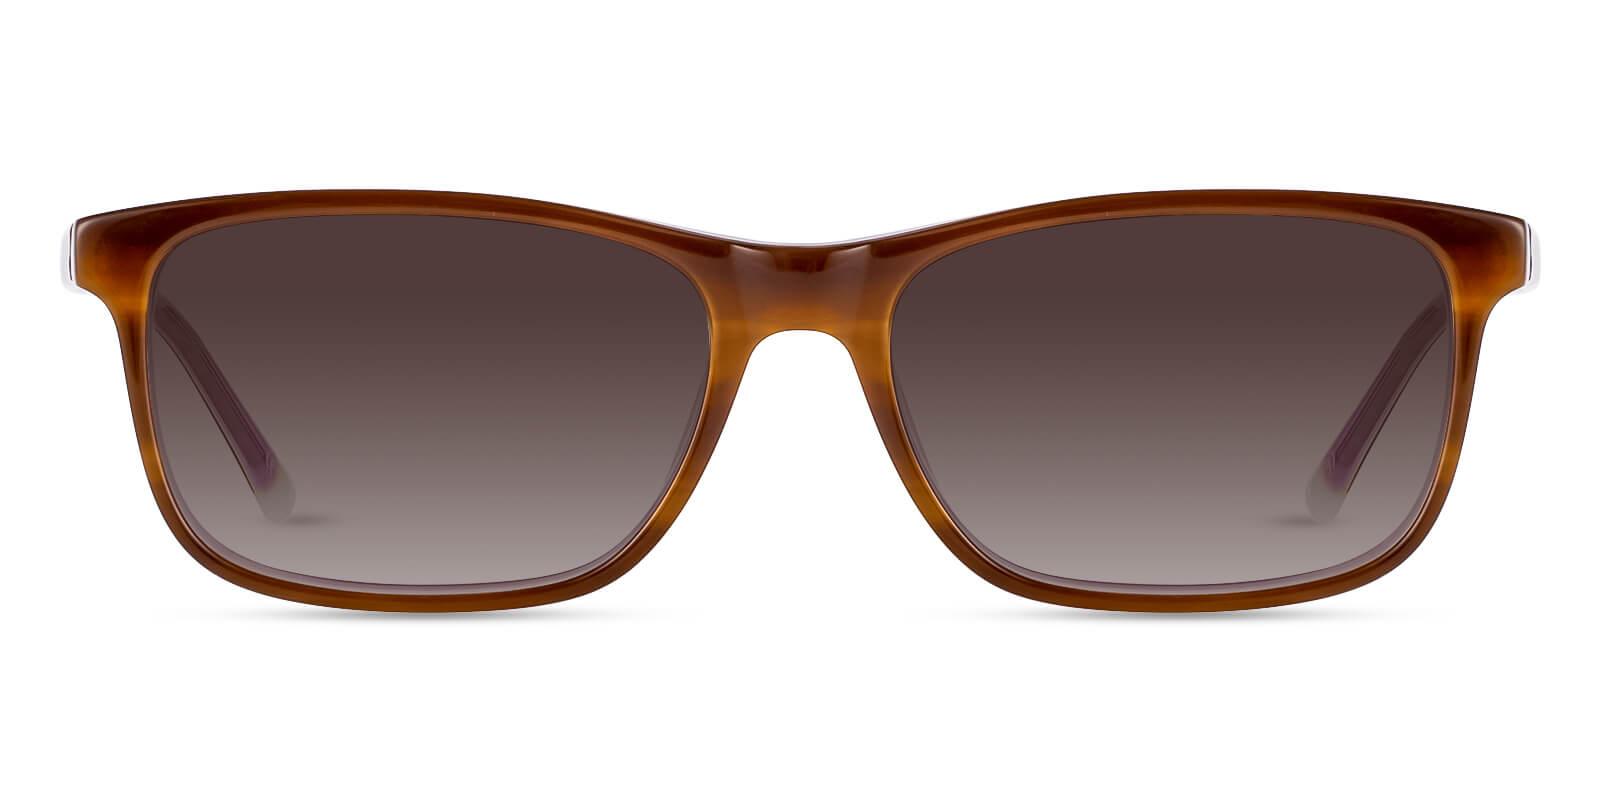 Candela Brown Acetate SpringHinges , Sunglasses , UniversalBridgeFit Frames from ABBE Glasses